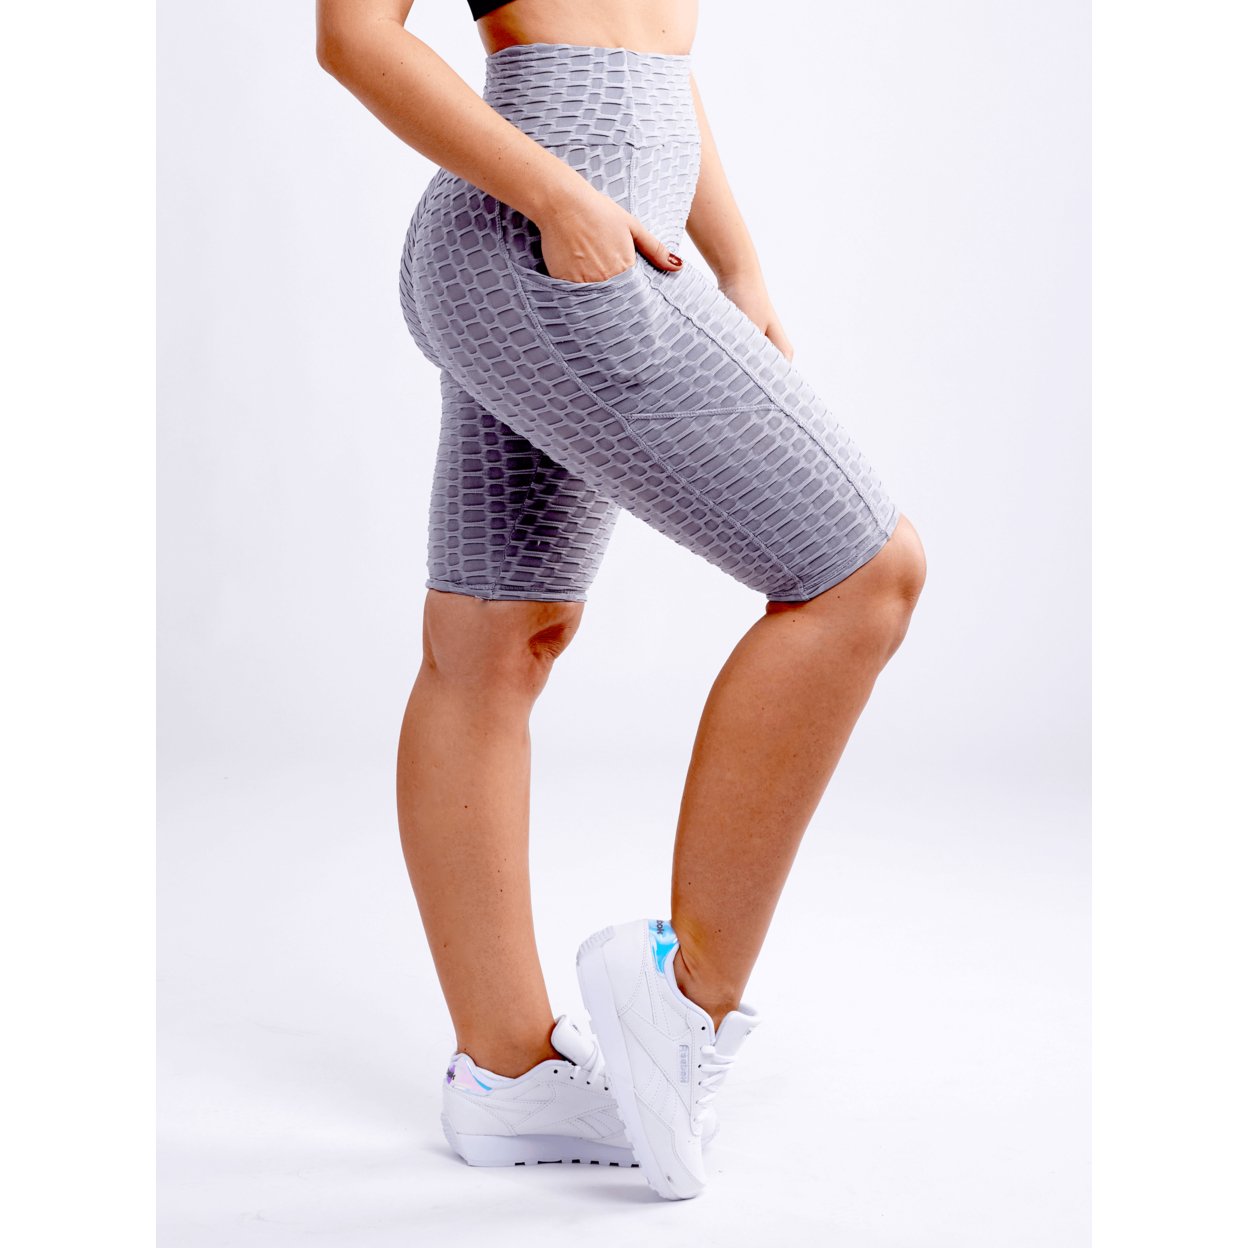 High-Waisted Scrunch Yoga Shorts With Hip Pockets - Grey, Small / Medium